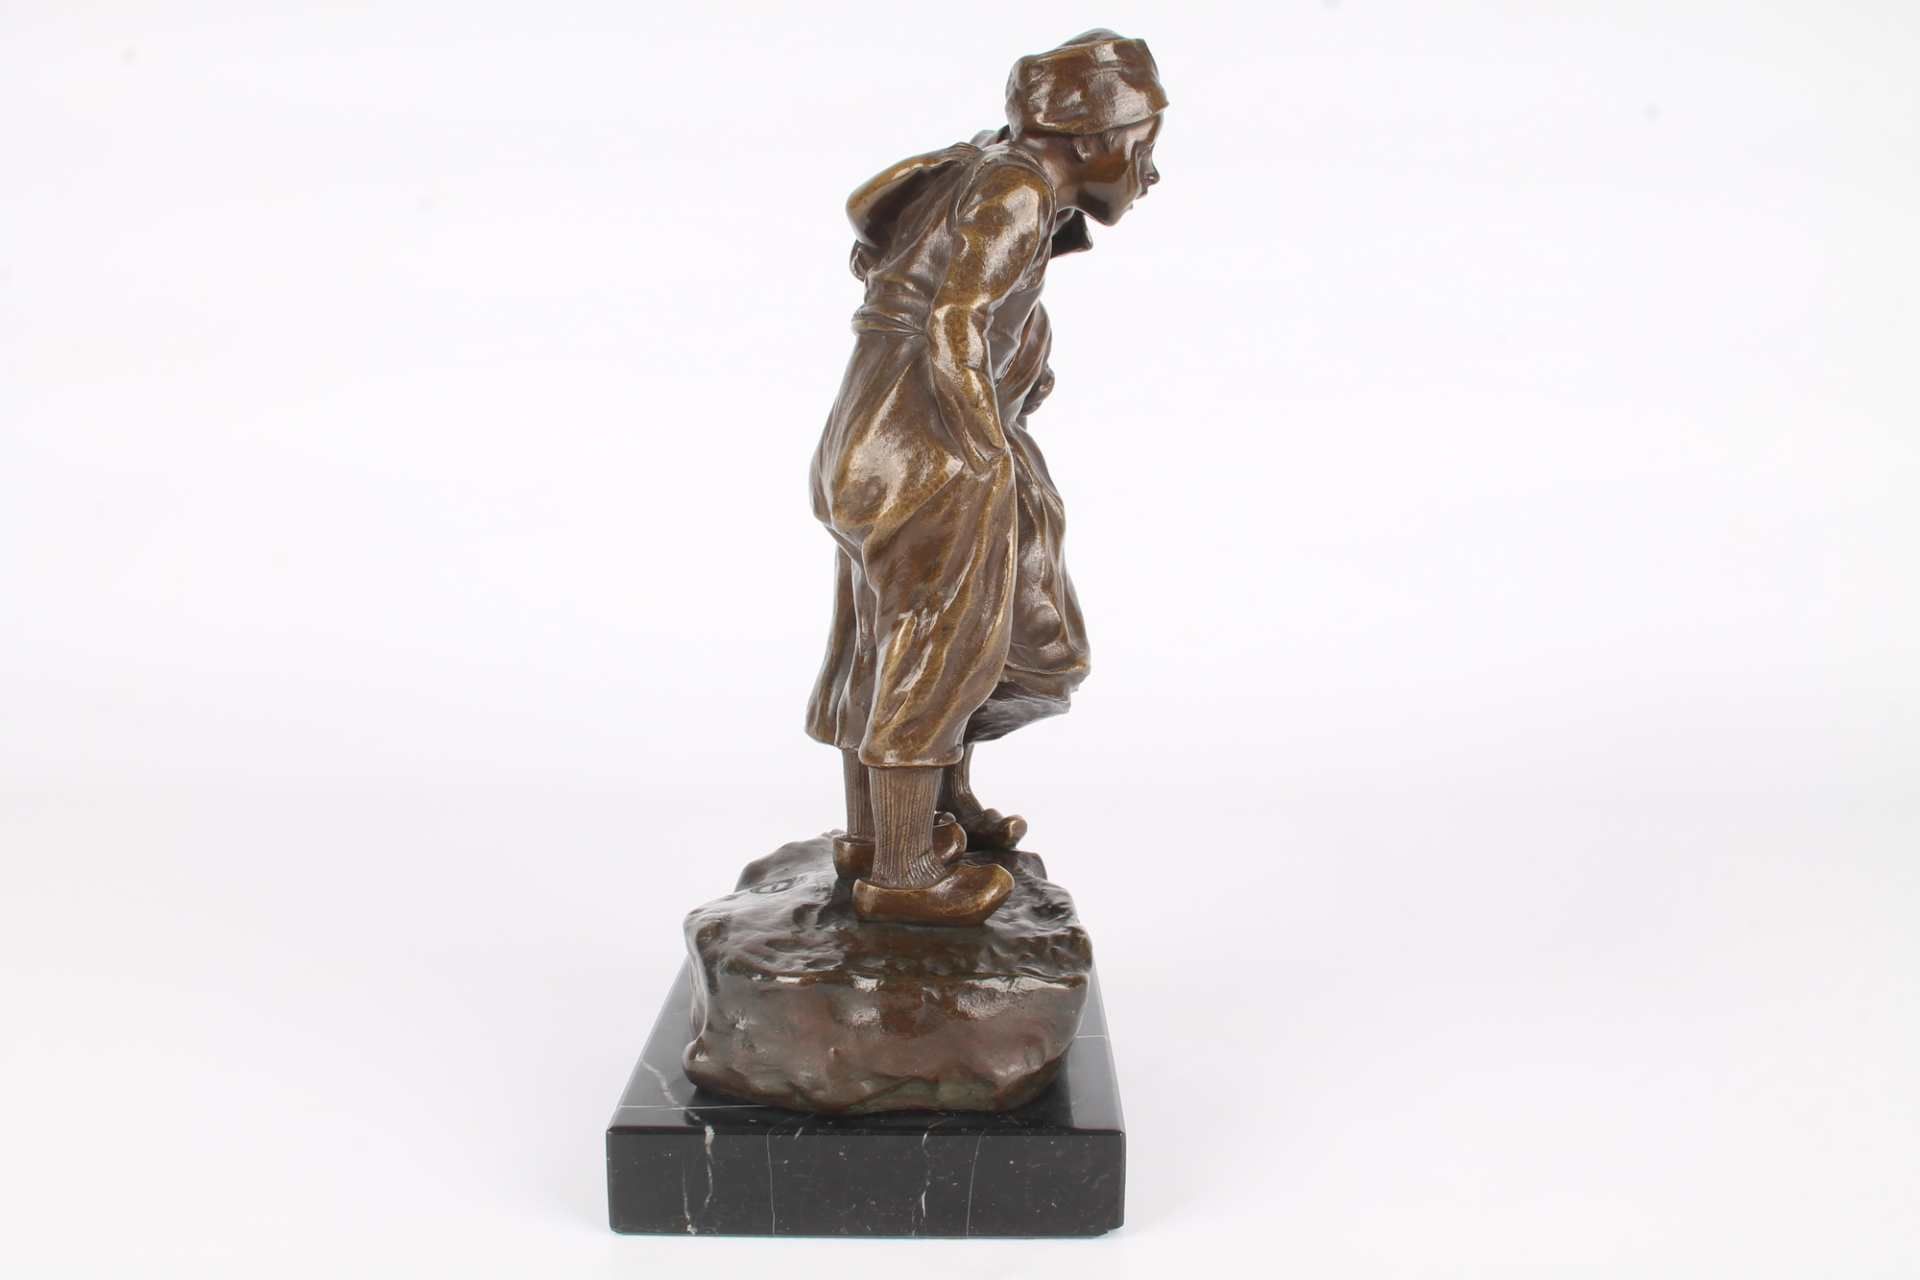 Bronze Figurengruppe by Martin & Piltzing Berlin, the secret figurine, - Image 3 of 6